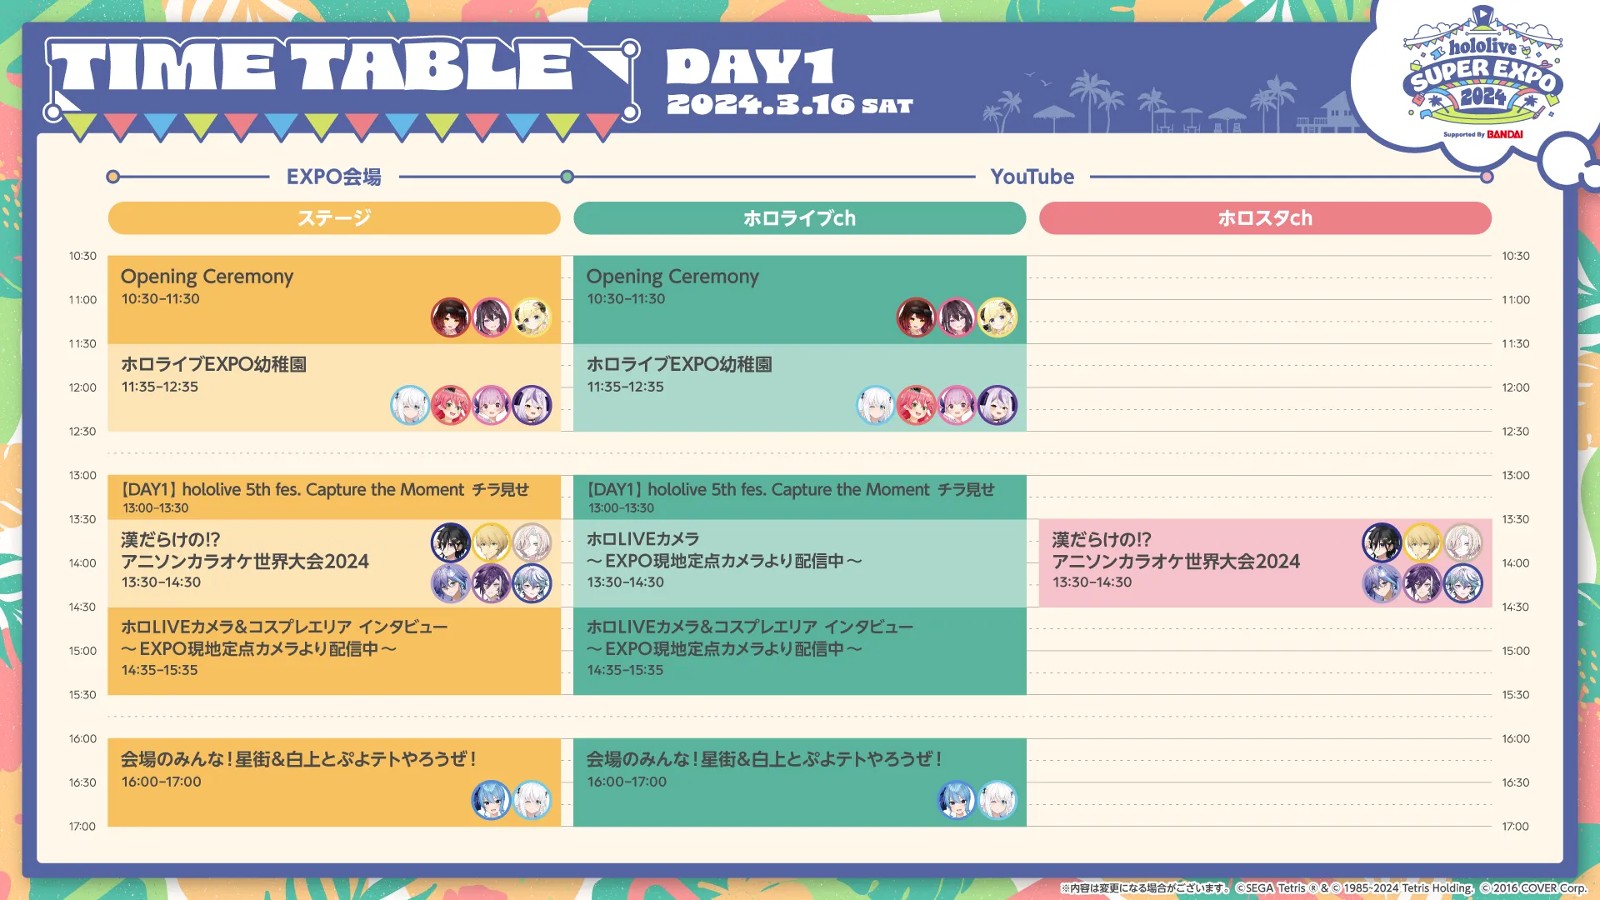 expo2024_timetable_yoko_day1_rev02